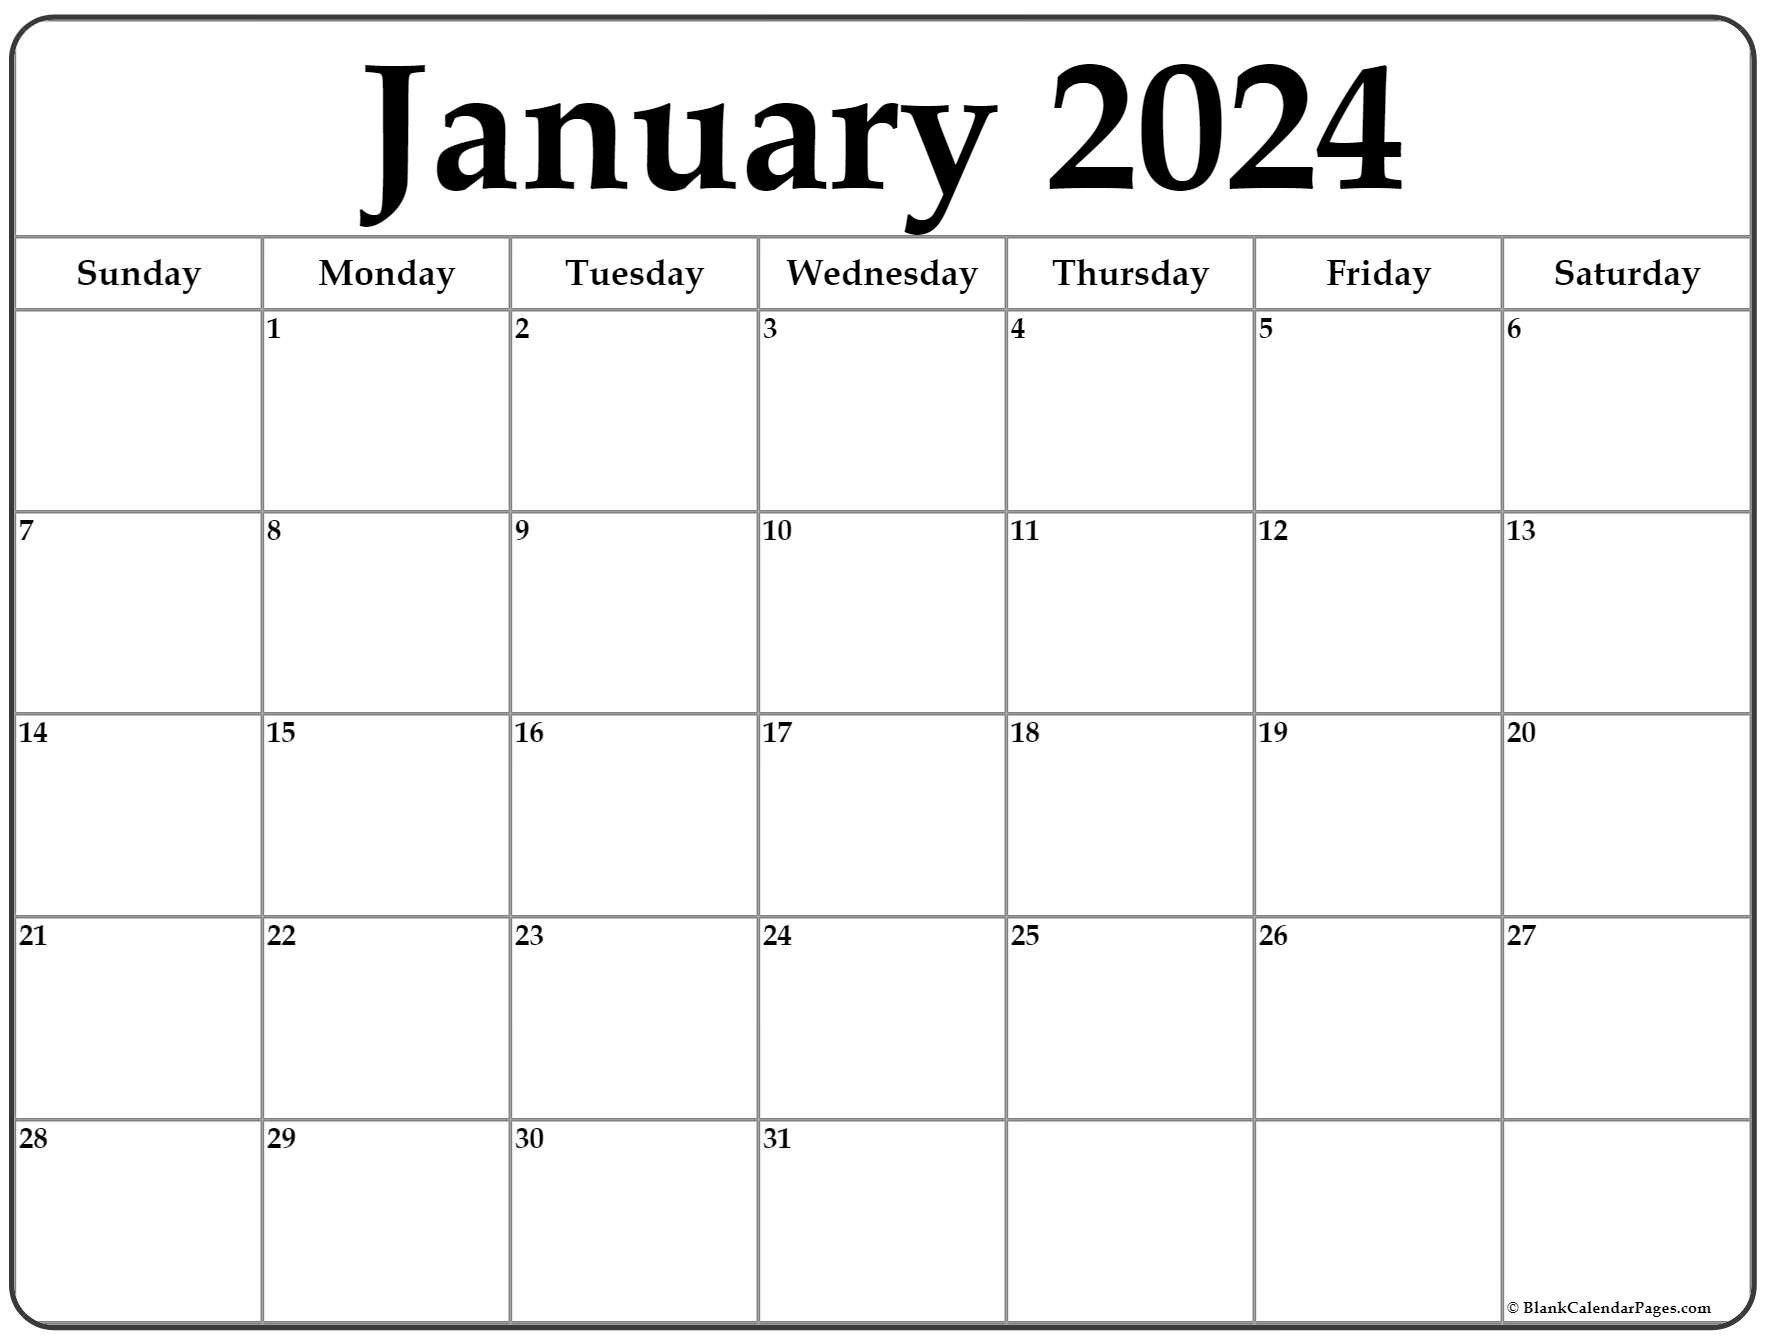 January 2024 Calendar | Free Printable Calendar in Free Printable Calendar 2024 By Month Canada